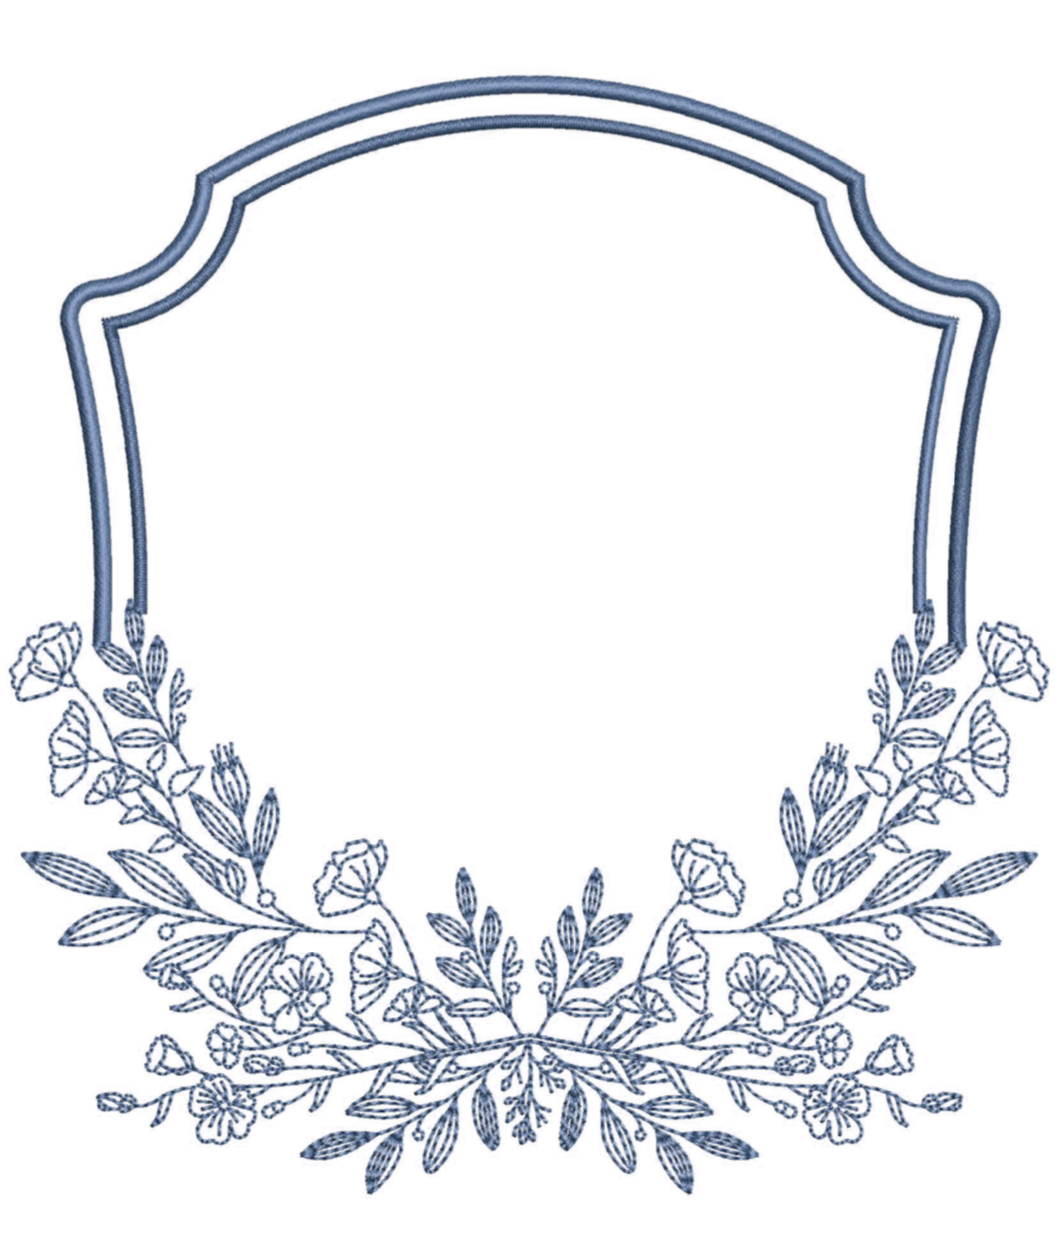 Carolina Crest for Embroidery